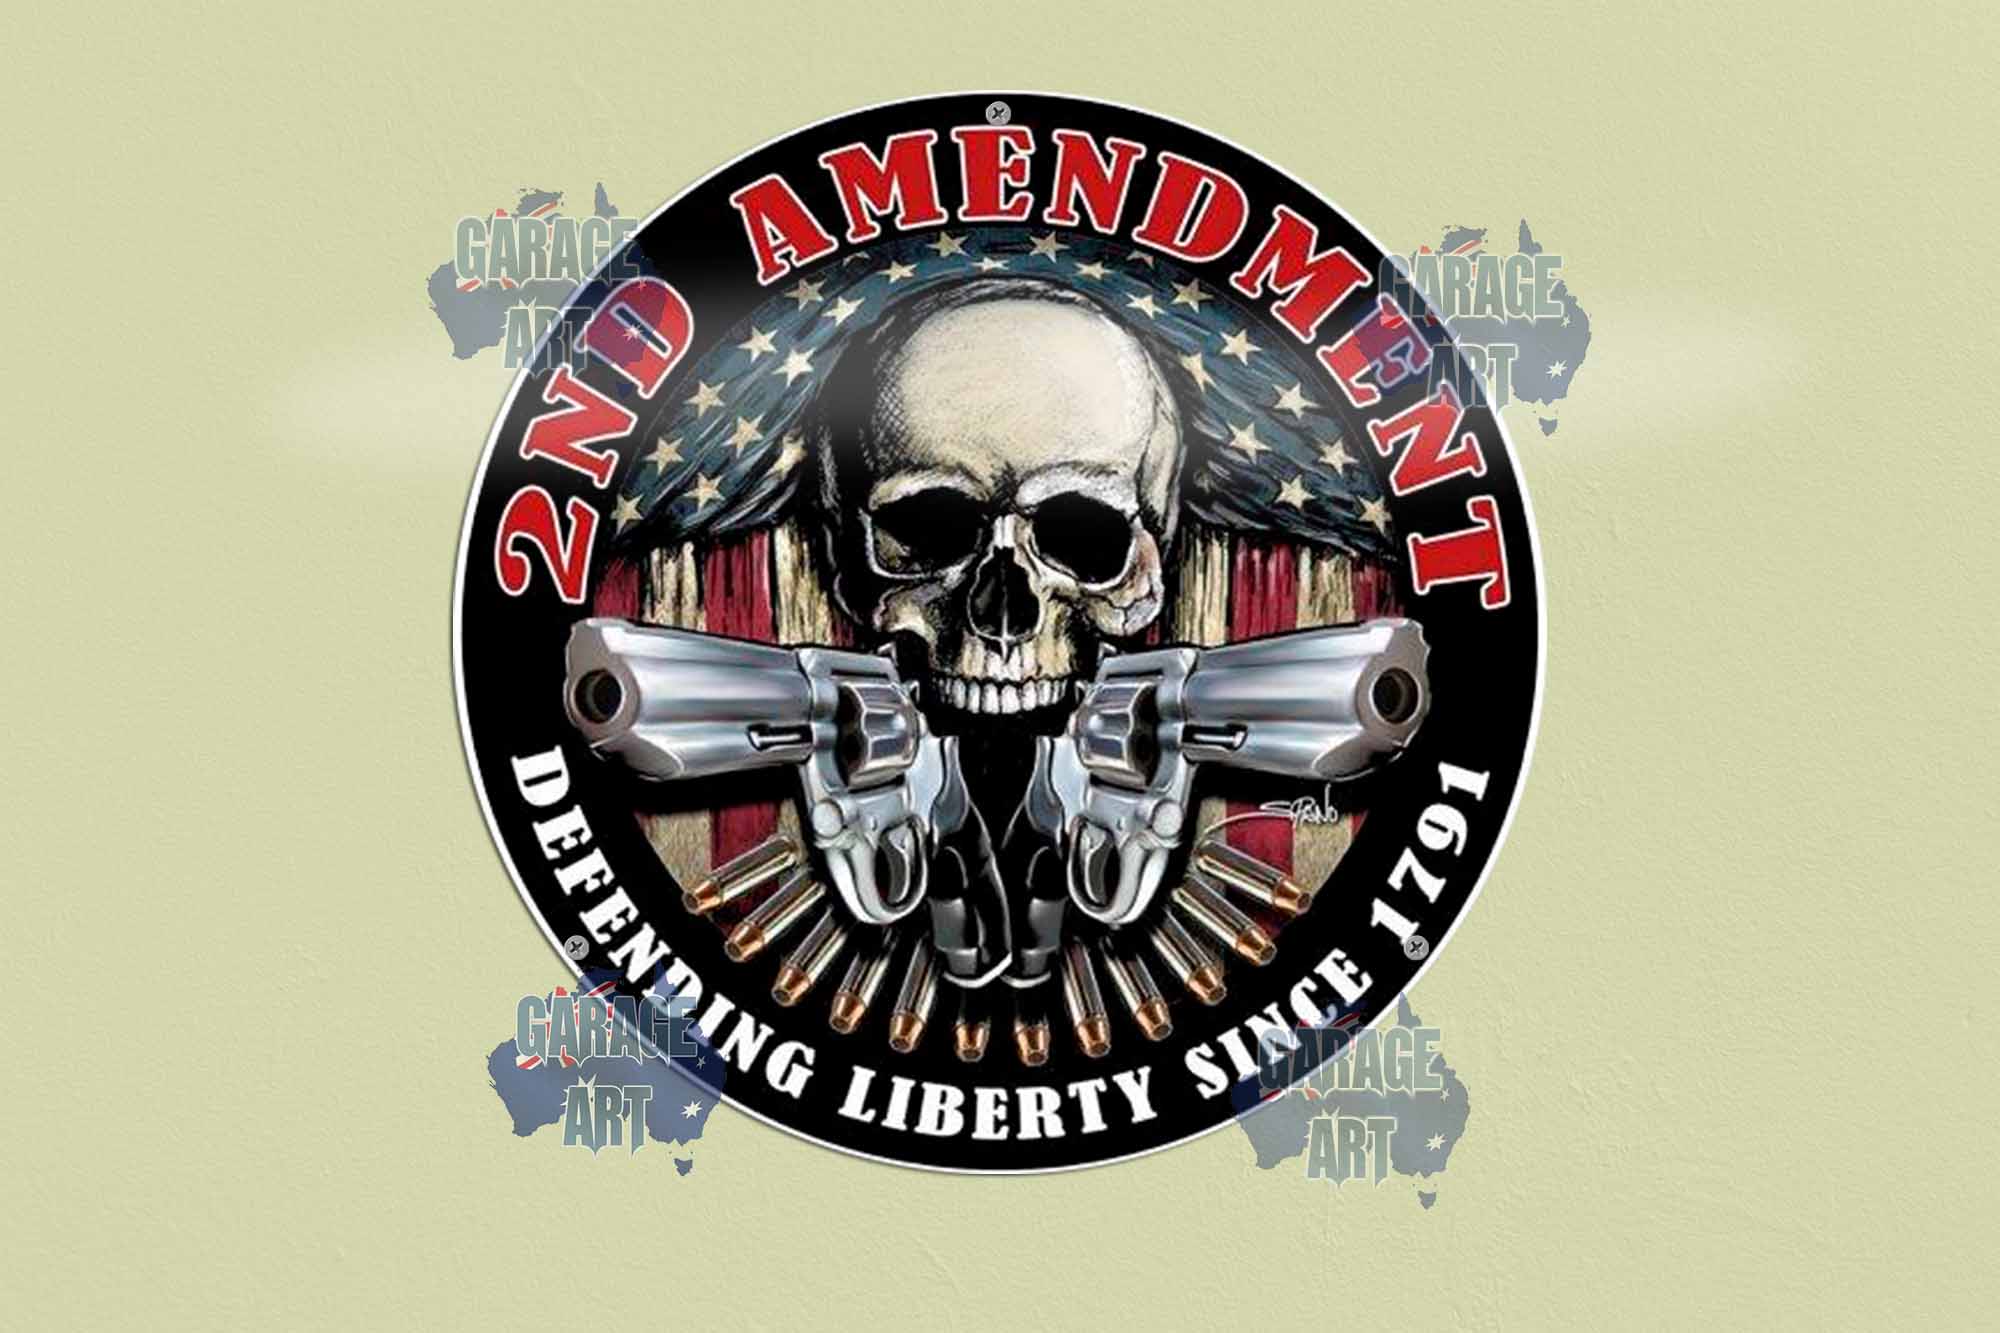 2nd Amendment Defending Liberty 2 355mmDIa Tin Sign freeshipping - garageartaustralia